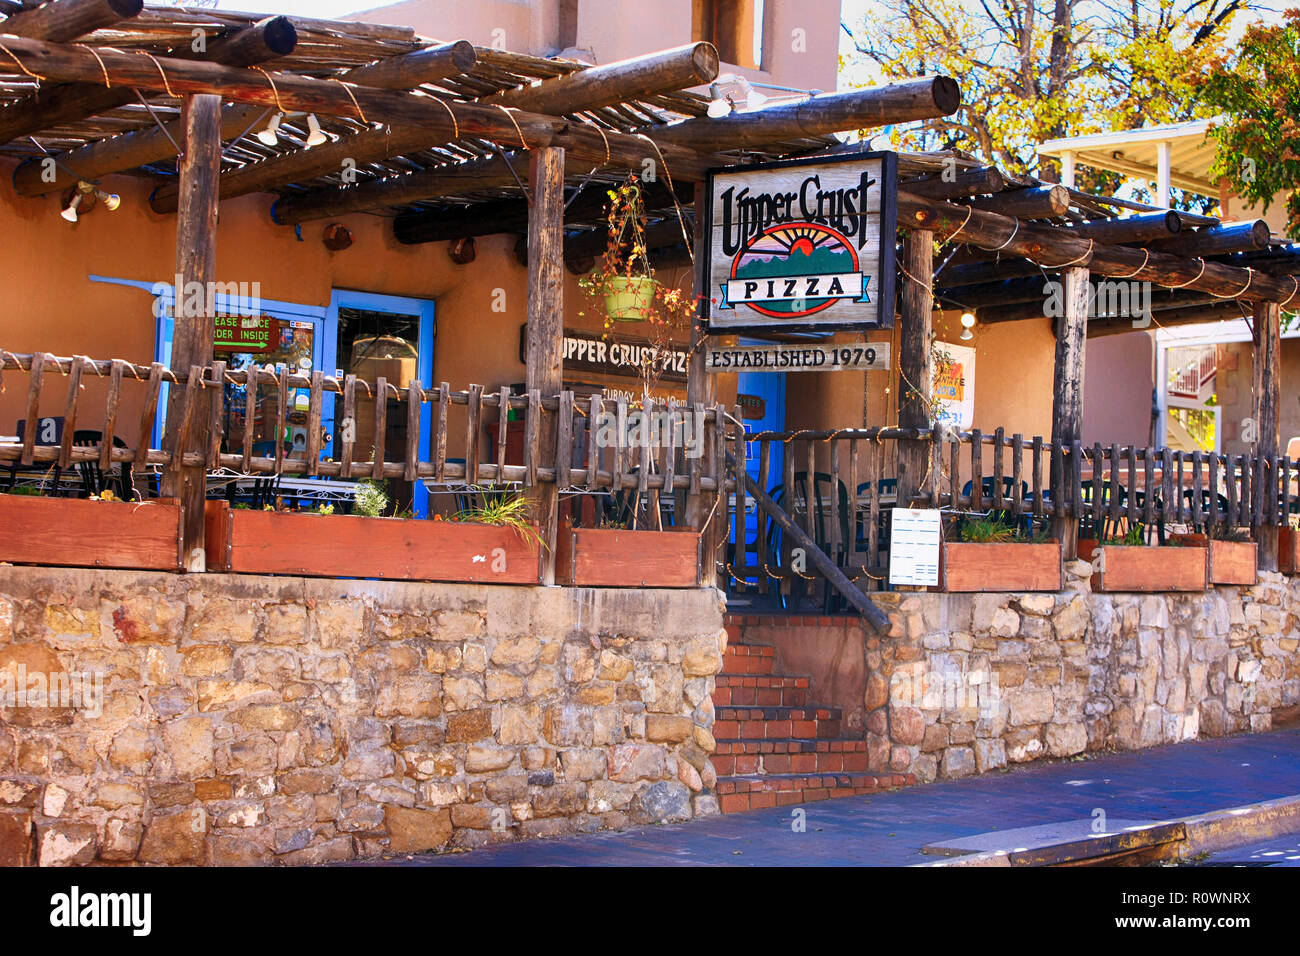 Upper Crust Pizza Restaurant on the Old Santa Fe Trail in Santa Fe, new Mexico, USA Stock Photo